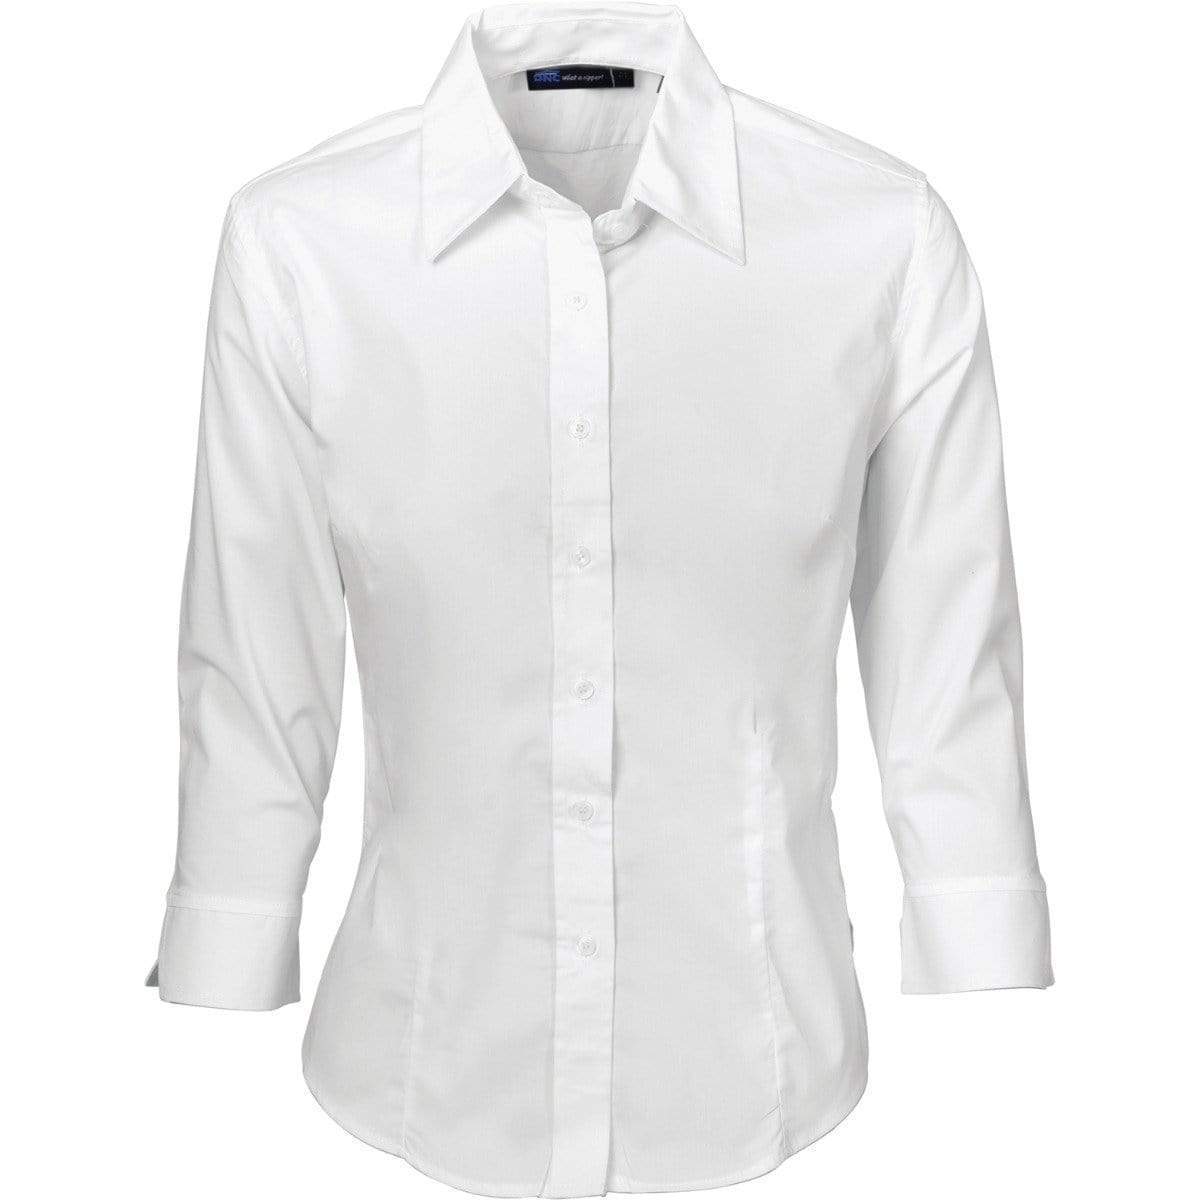 Dnc Workwear Ladies Premier Stretch Poplin 3/4 Sleeve Business Shirt - 4232 Corporate Wear DNC Workwear White 6 